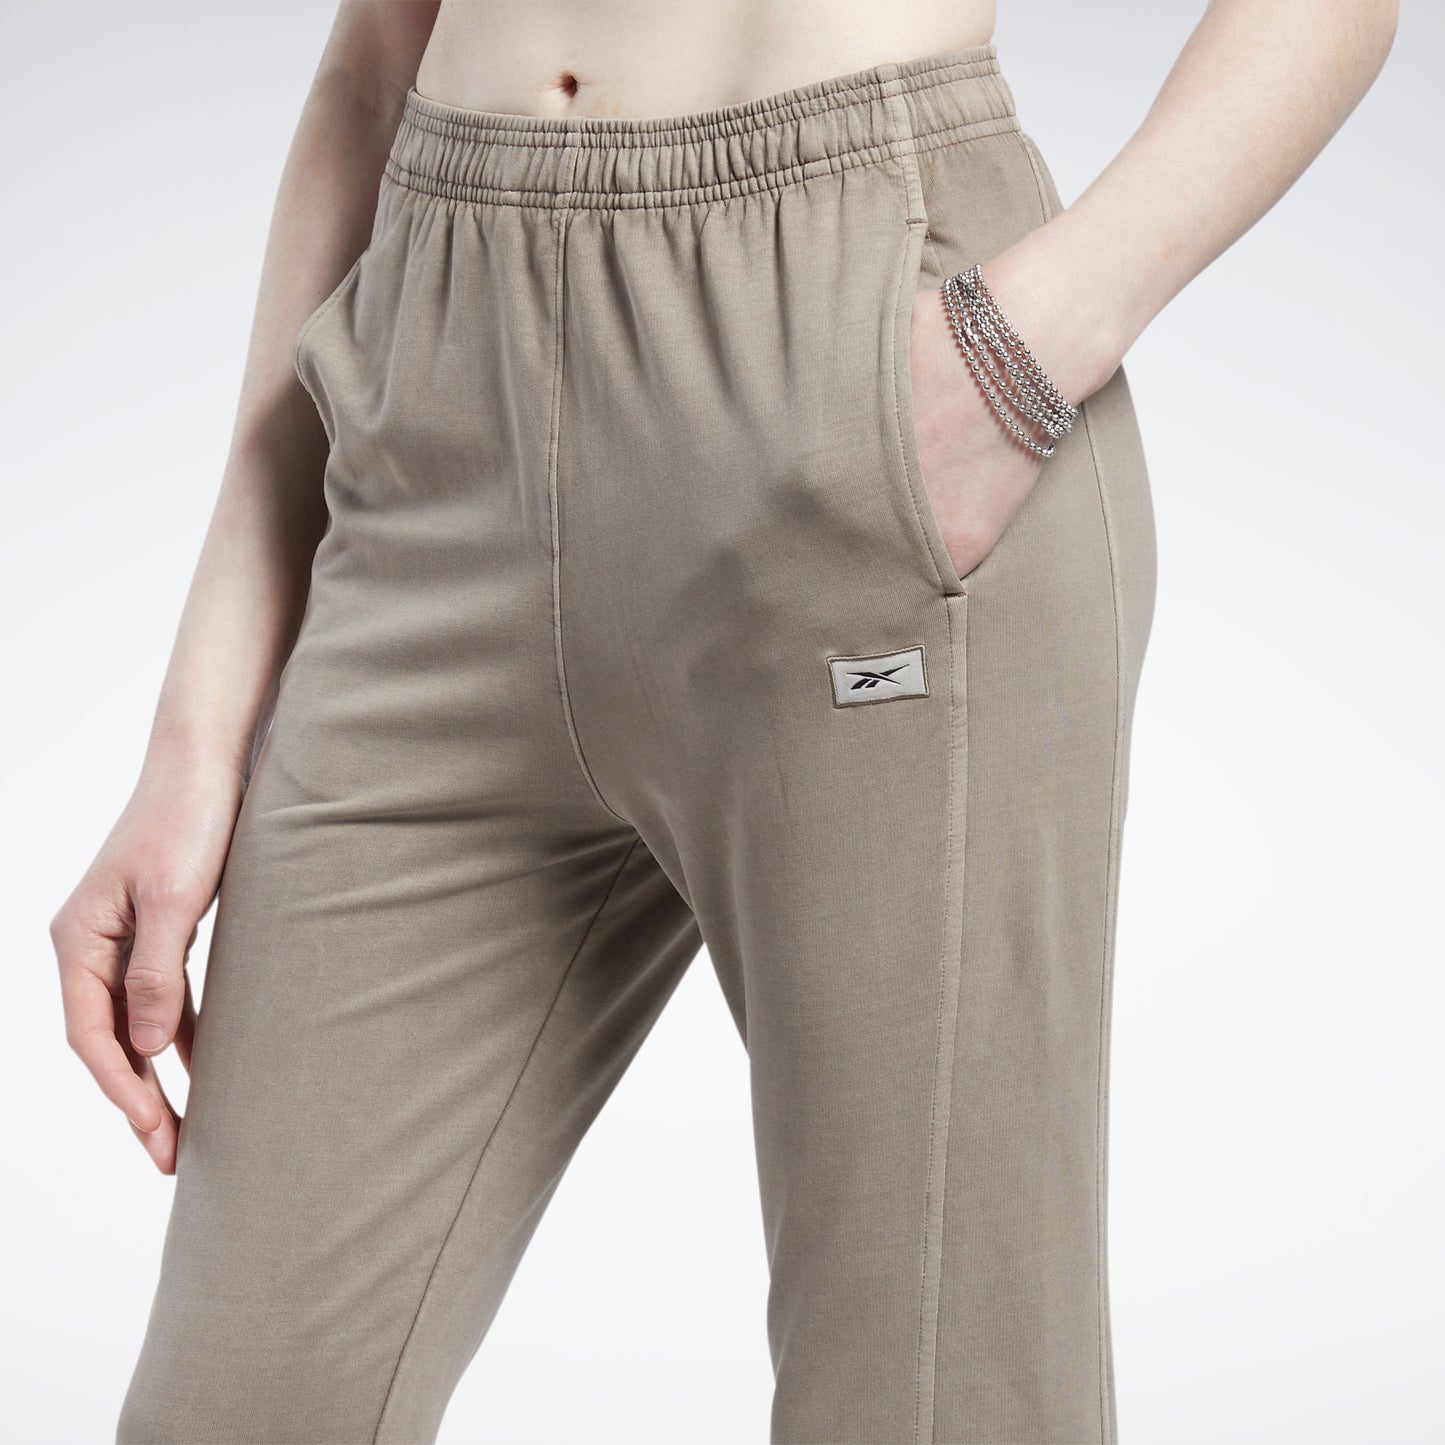 Core 10 by Reebok Women's French Terry Big Logo Joggers - ShopStyle Pants